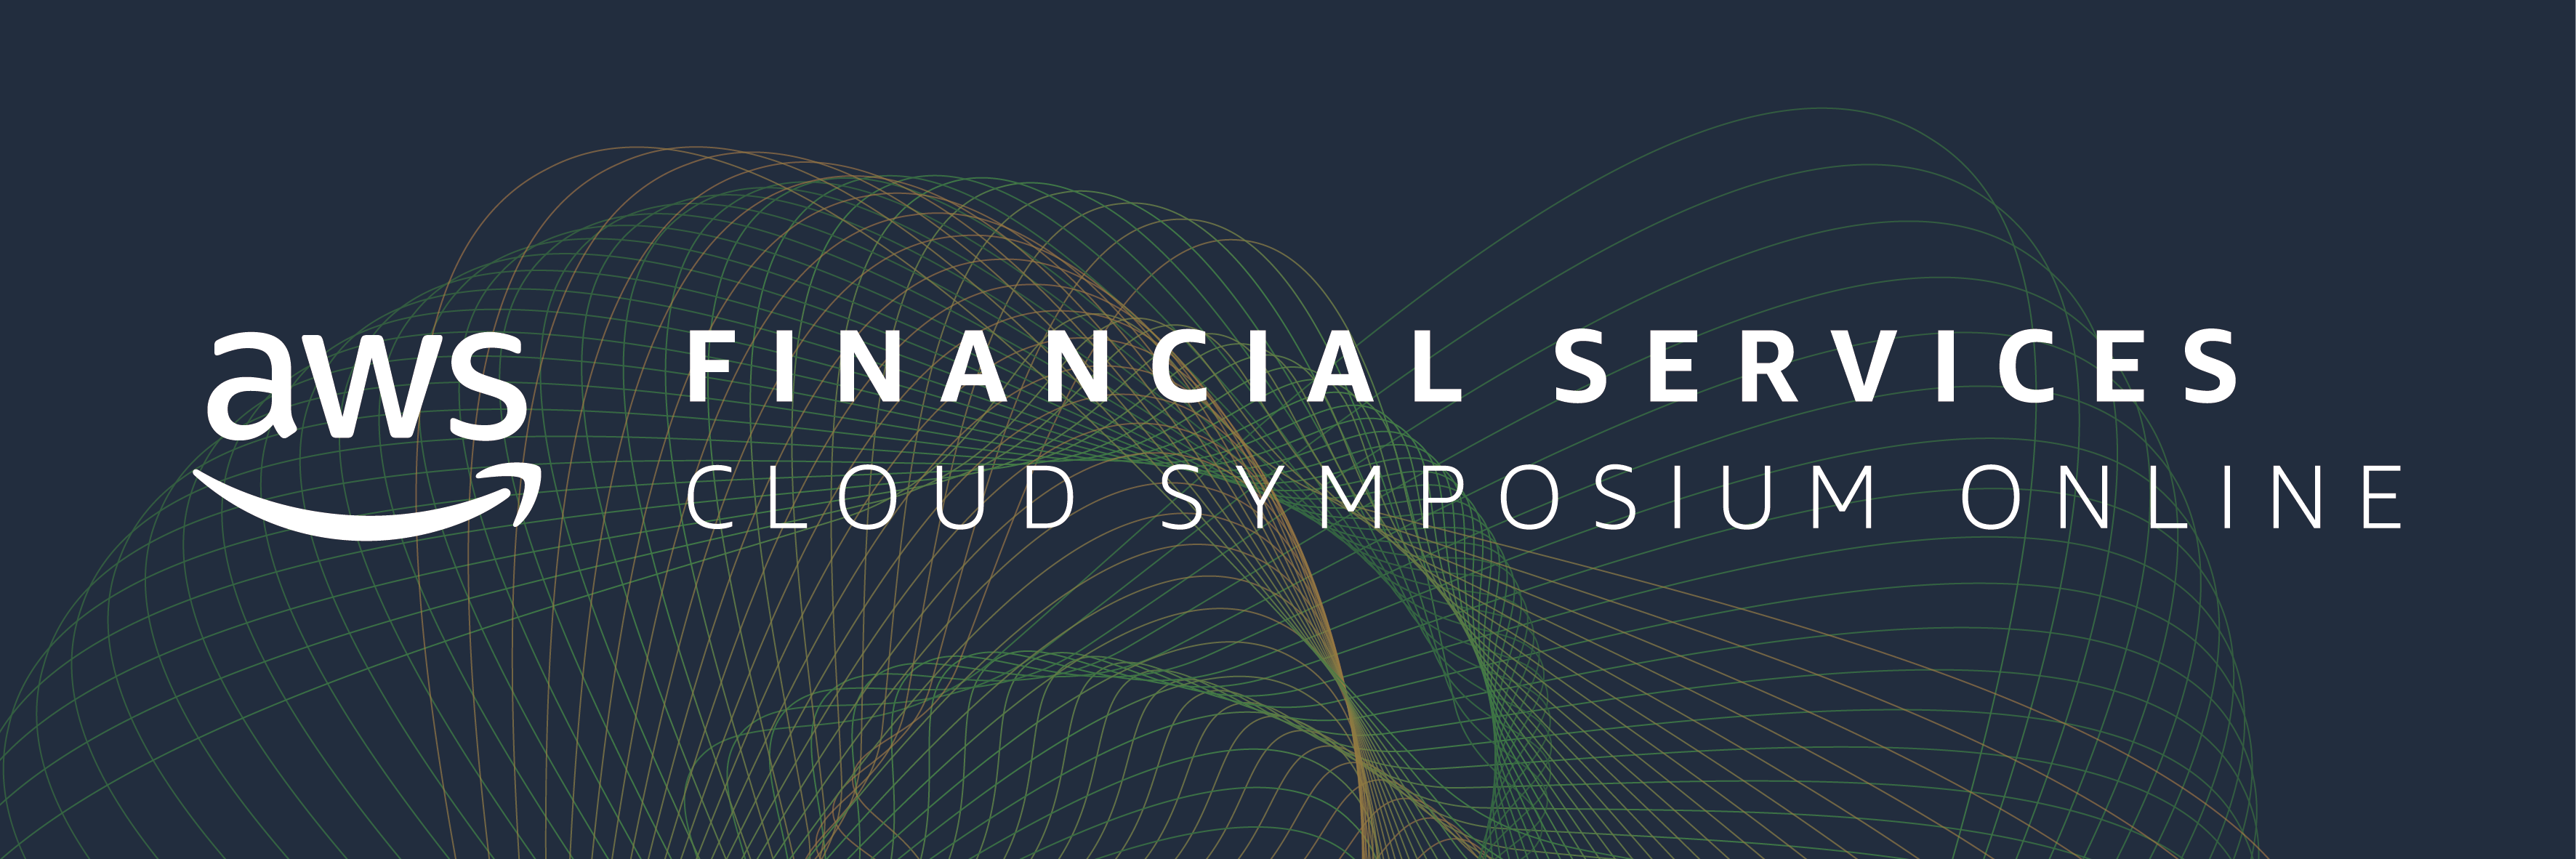 AWS Financial Services Cloud Symposium Online